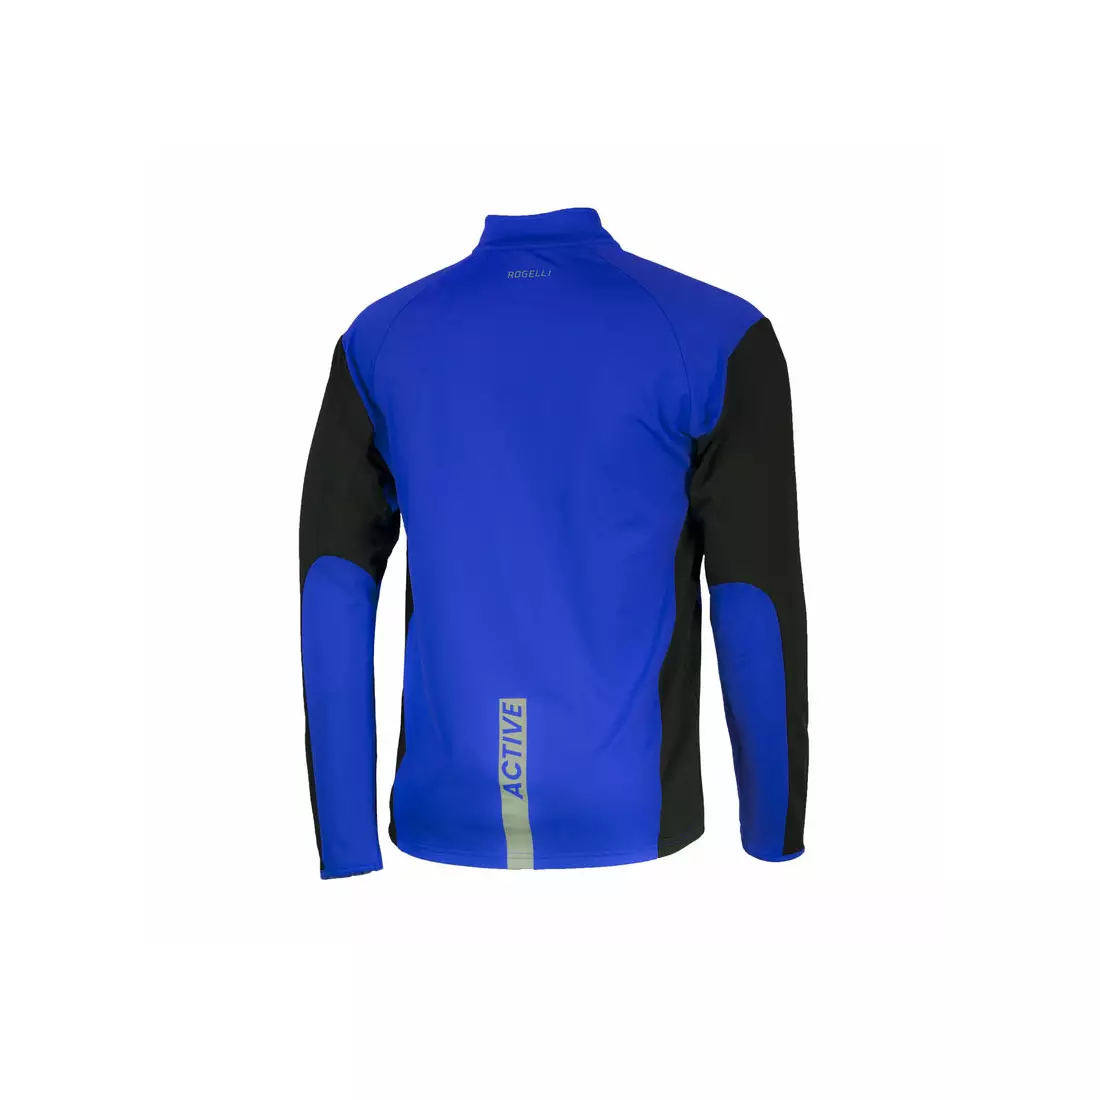 ROGELLI RUN - DILLON - men's lightly insulated running sweatshirt, color: Blue